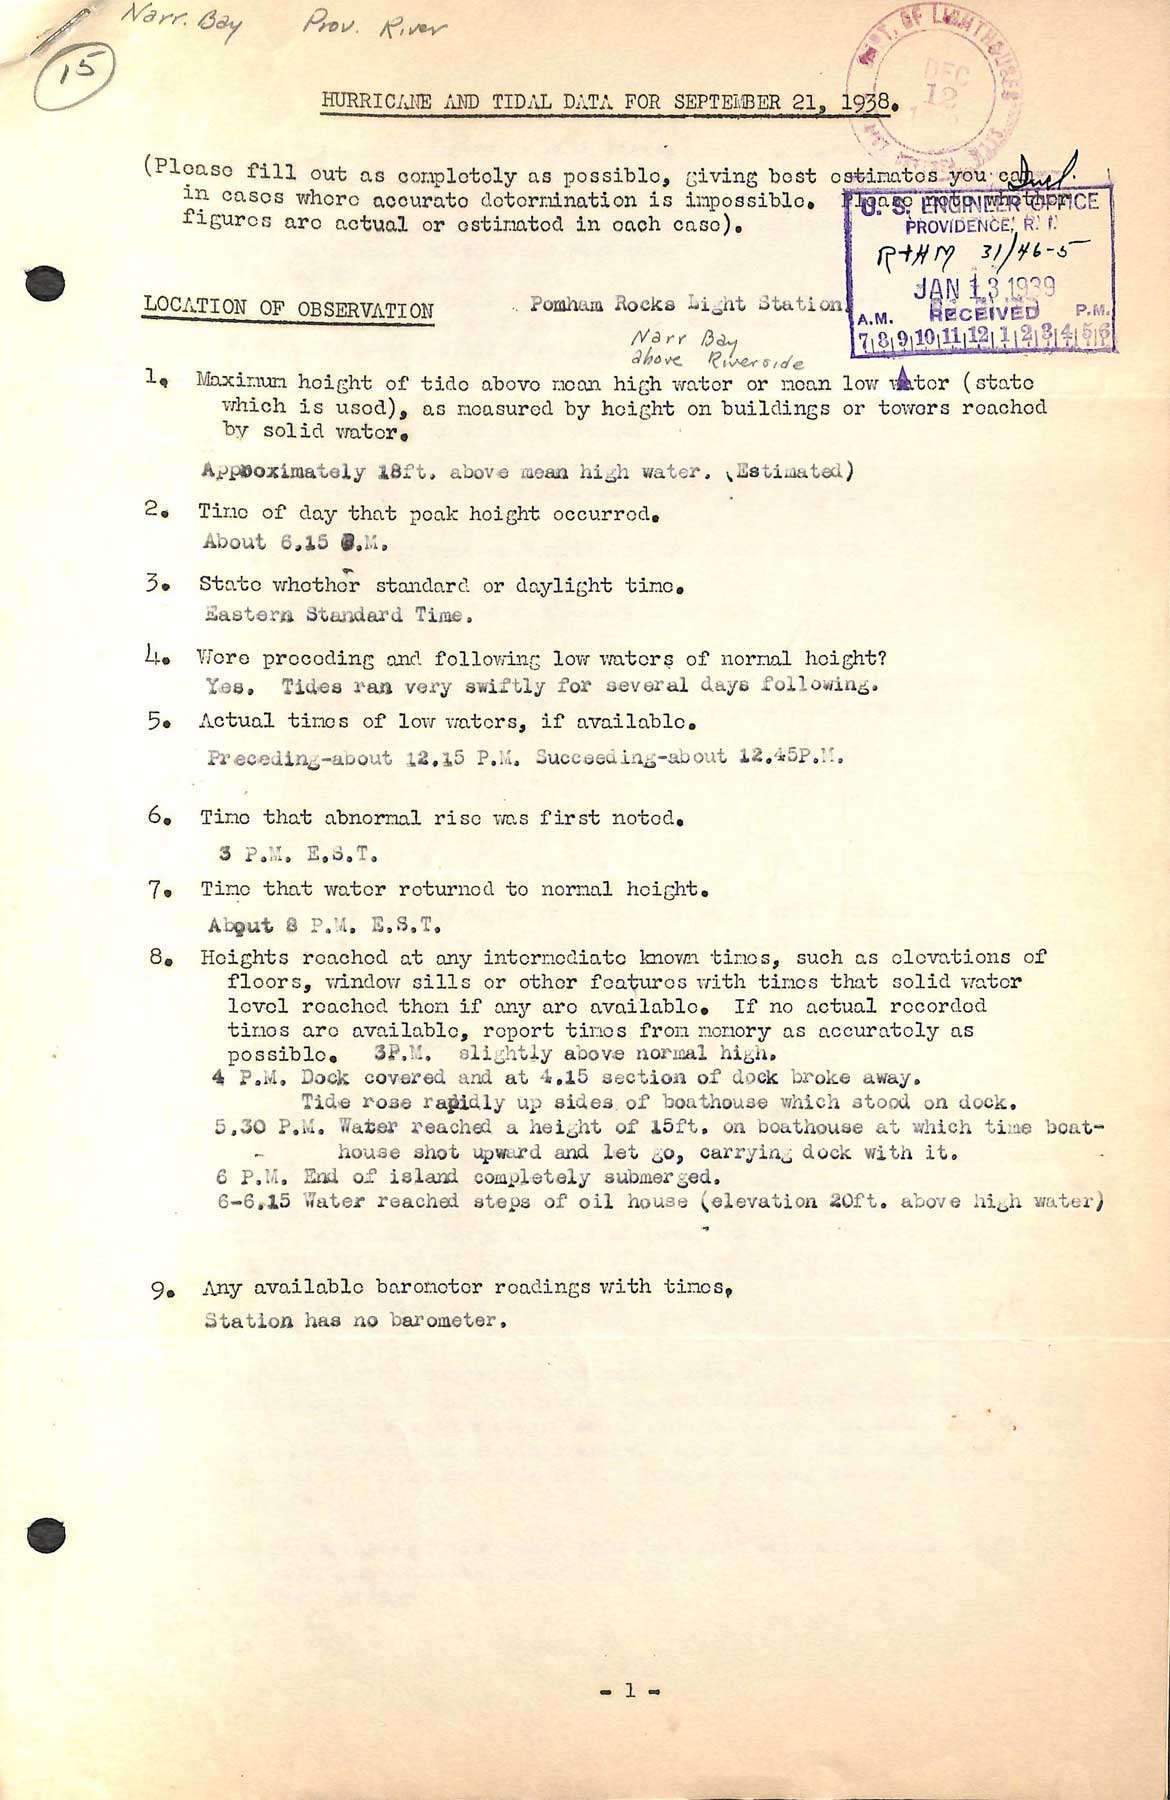 Pohman Rock Light - A questionnaire regarding the Effects of hurricane of September 21, 1938